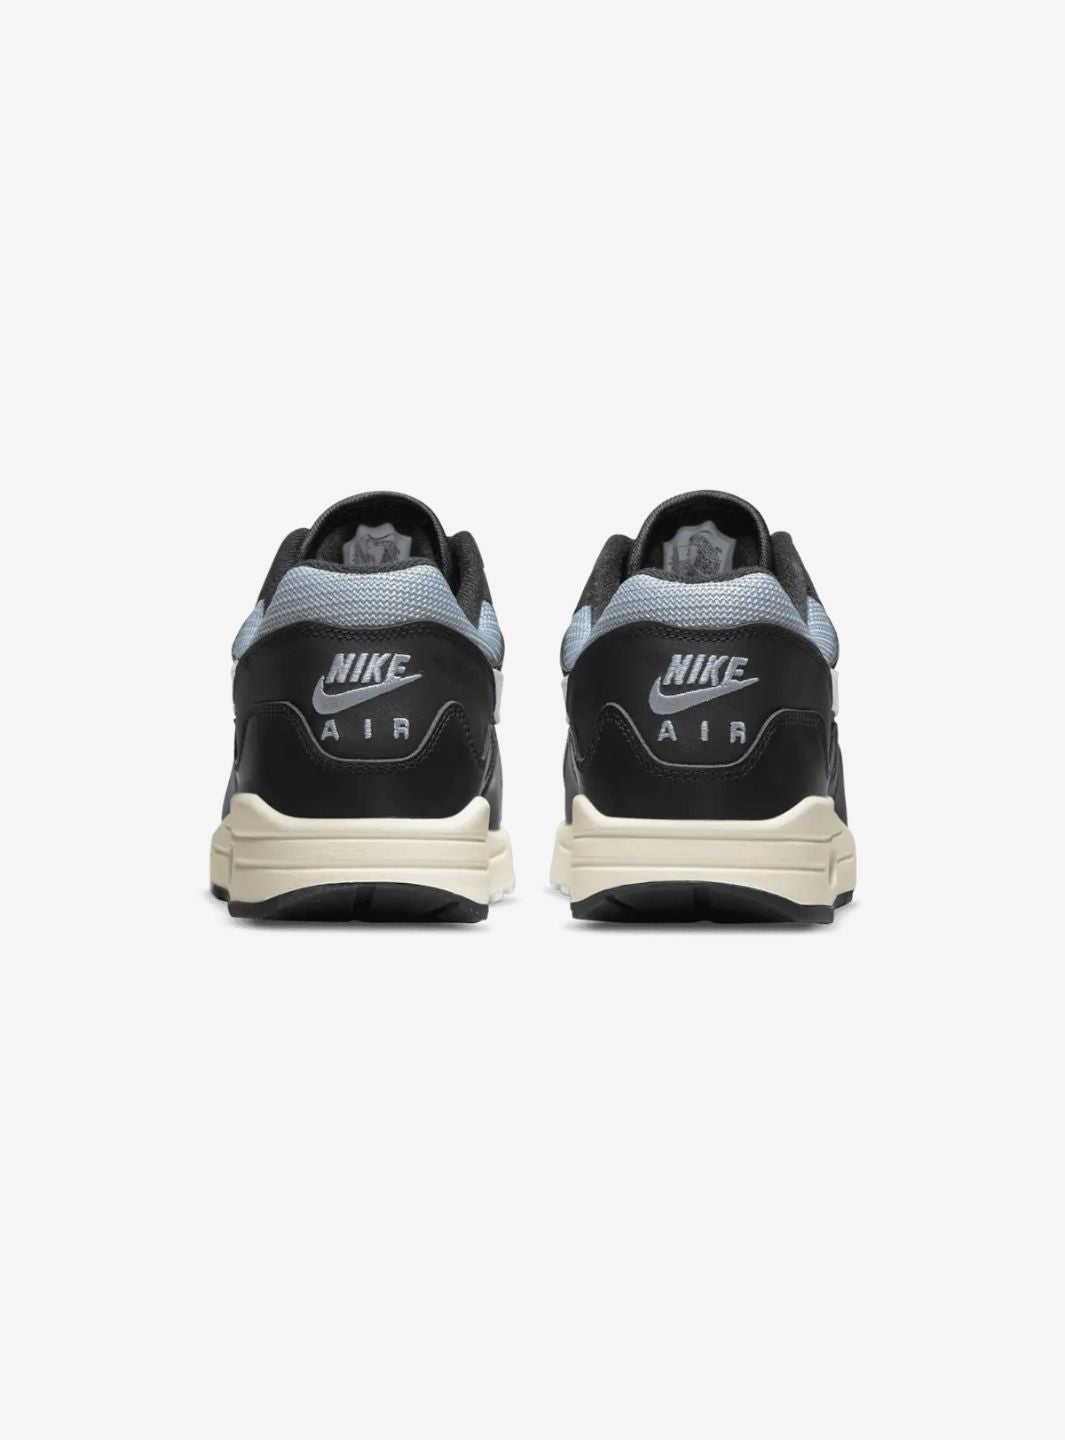 Nike Air Max 1 Patta Waves Black - DQ0299-001 | ResellZone